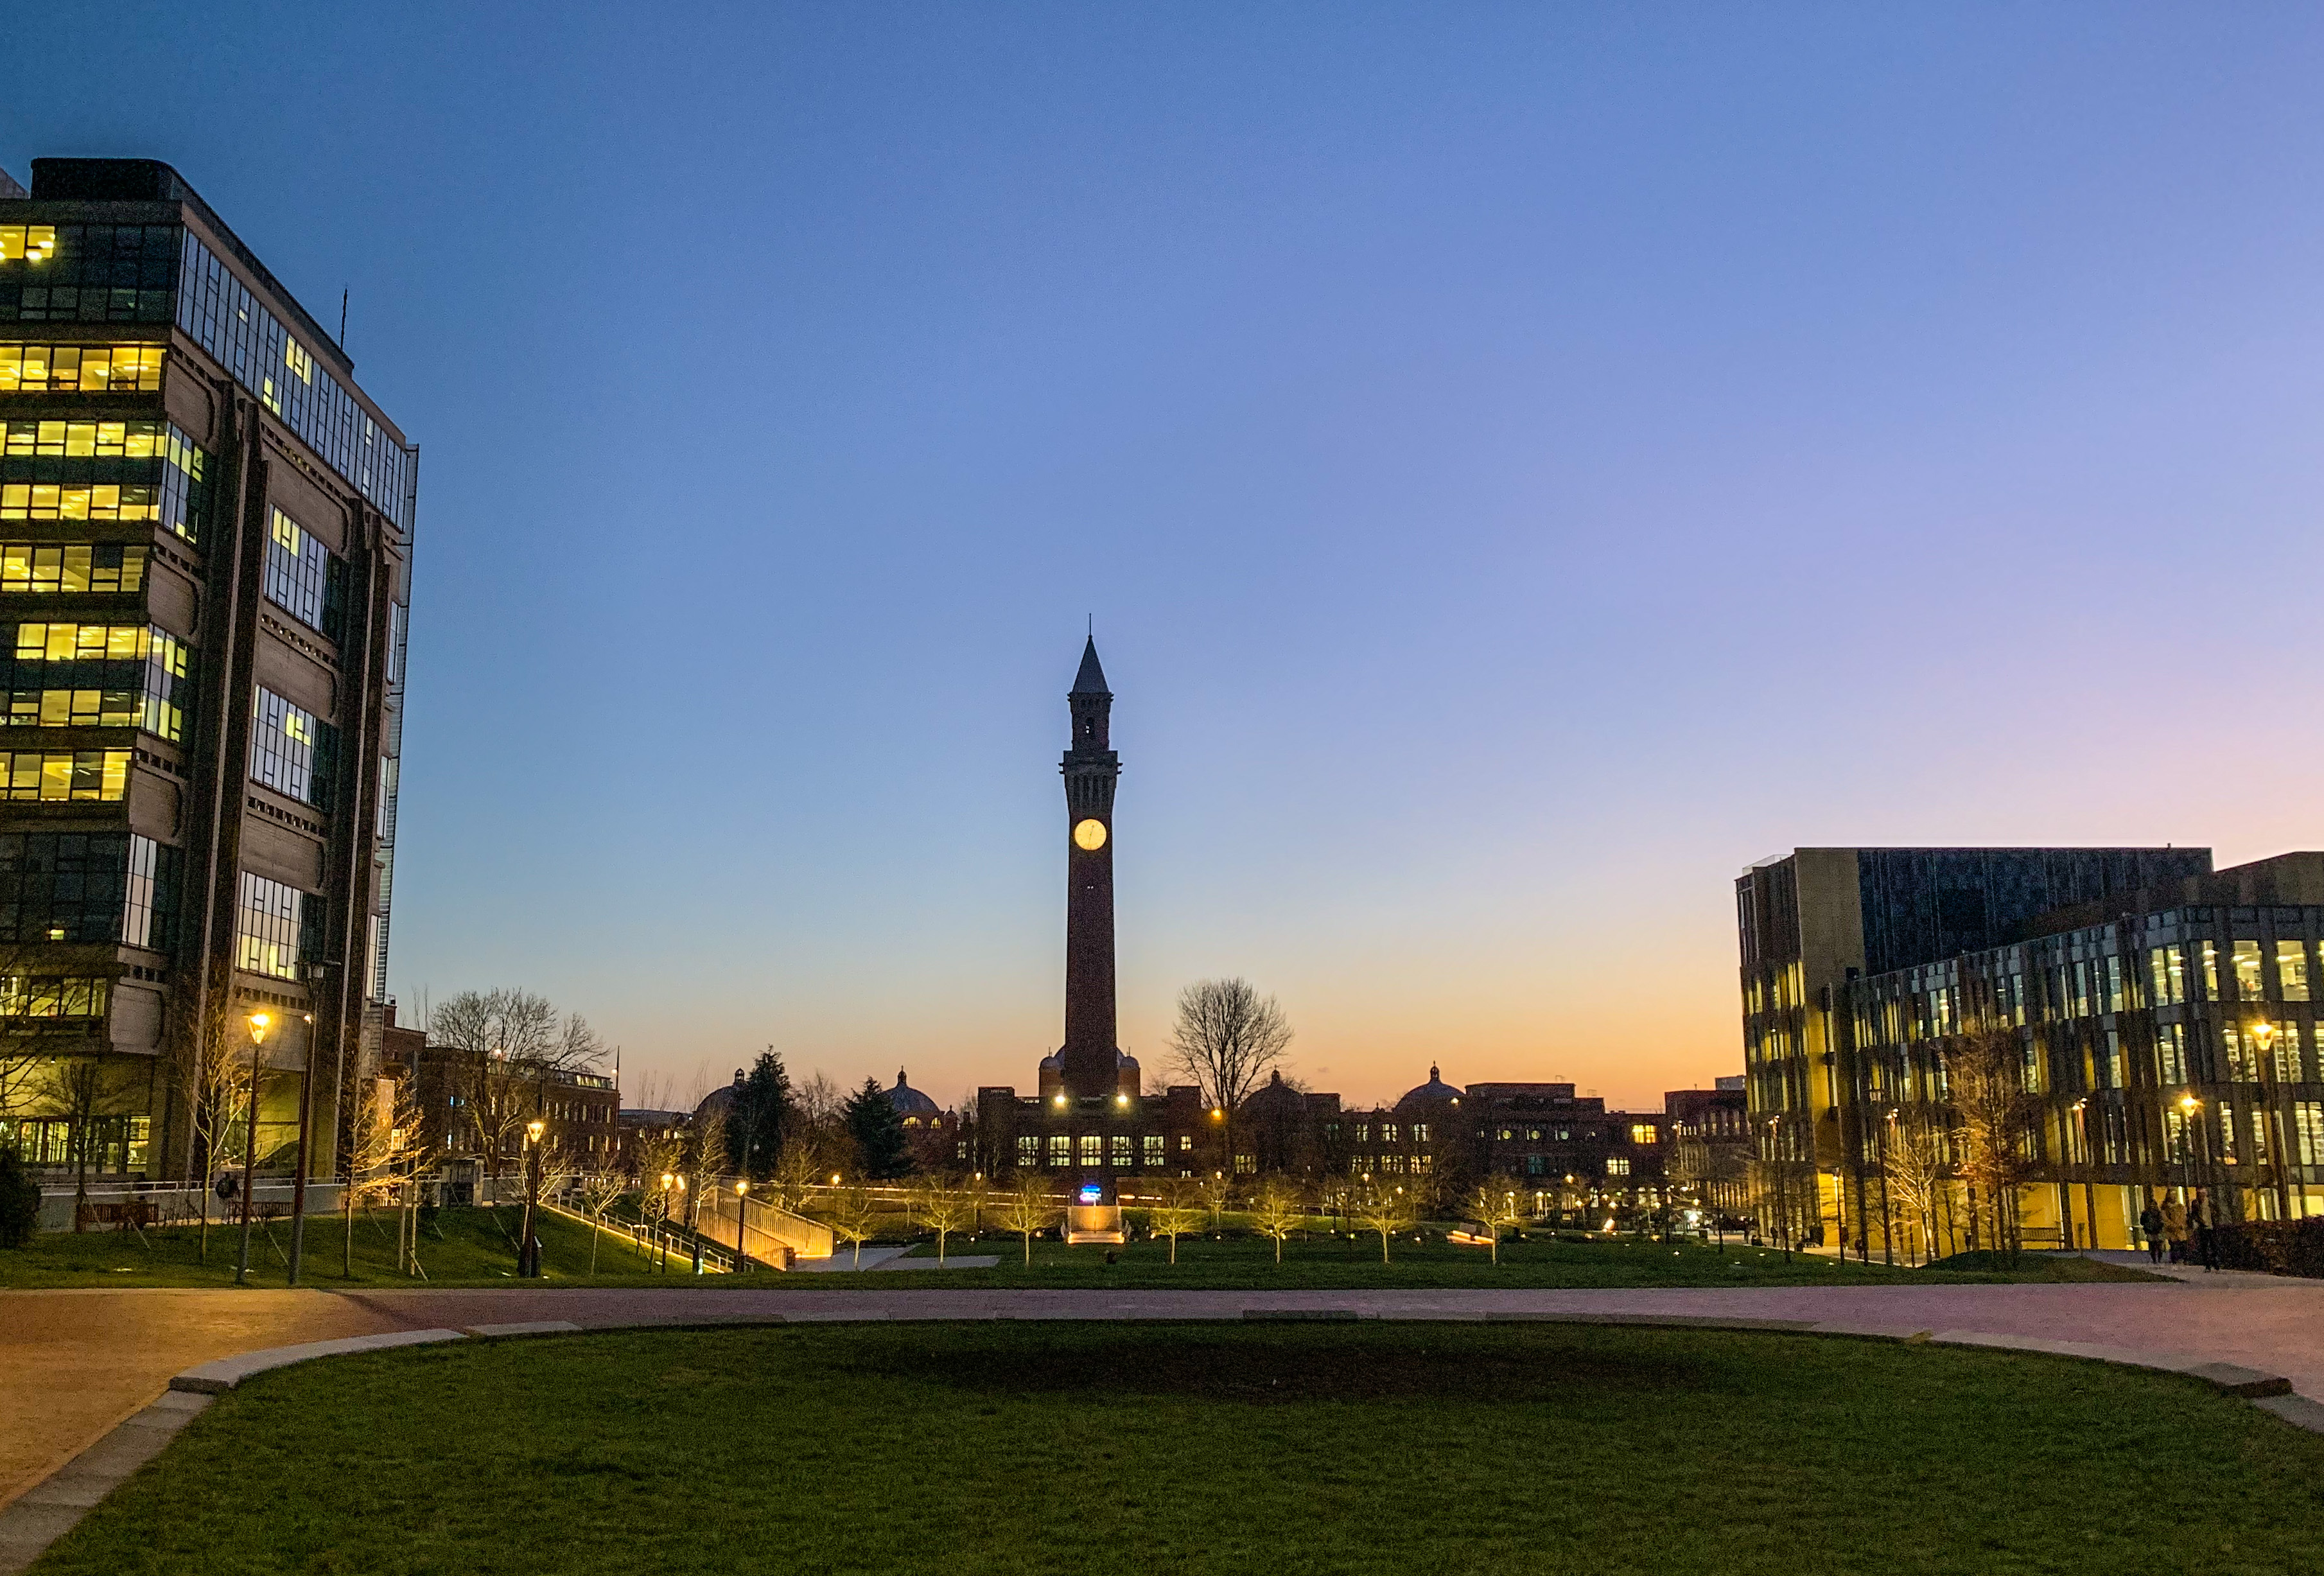 The University of Birmingham campus at night